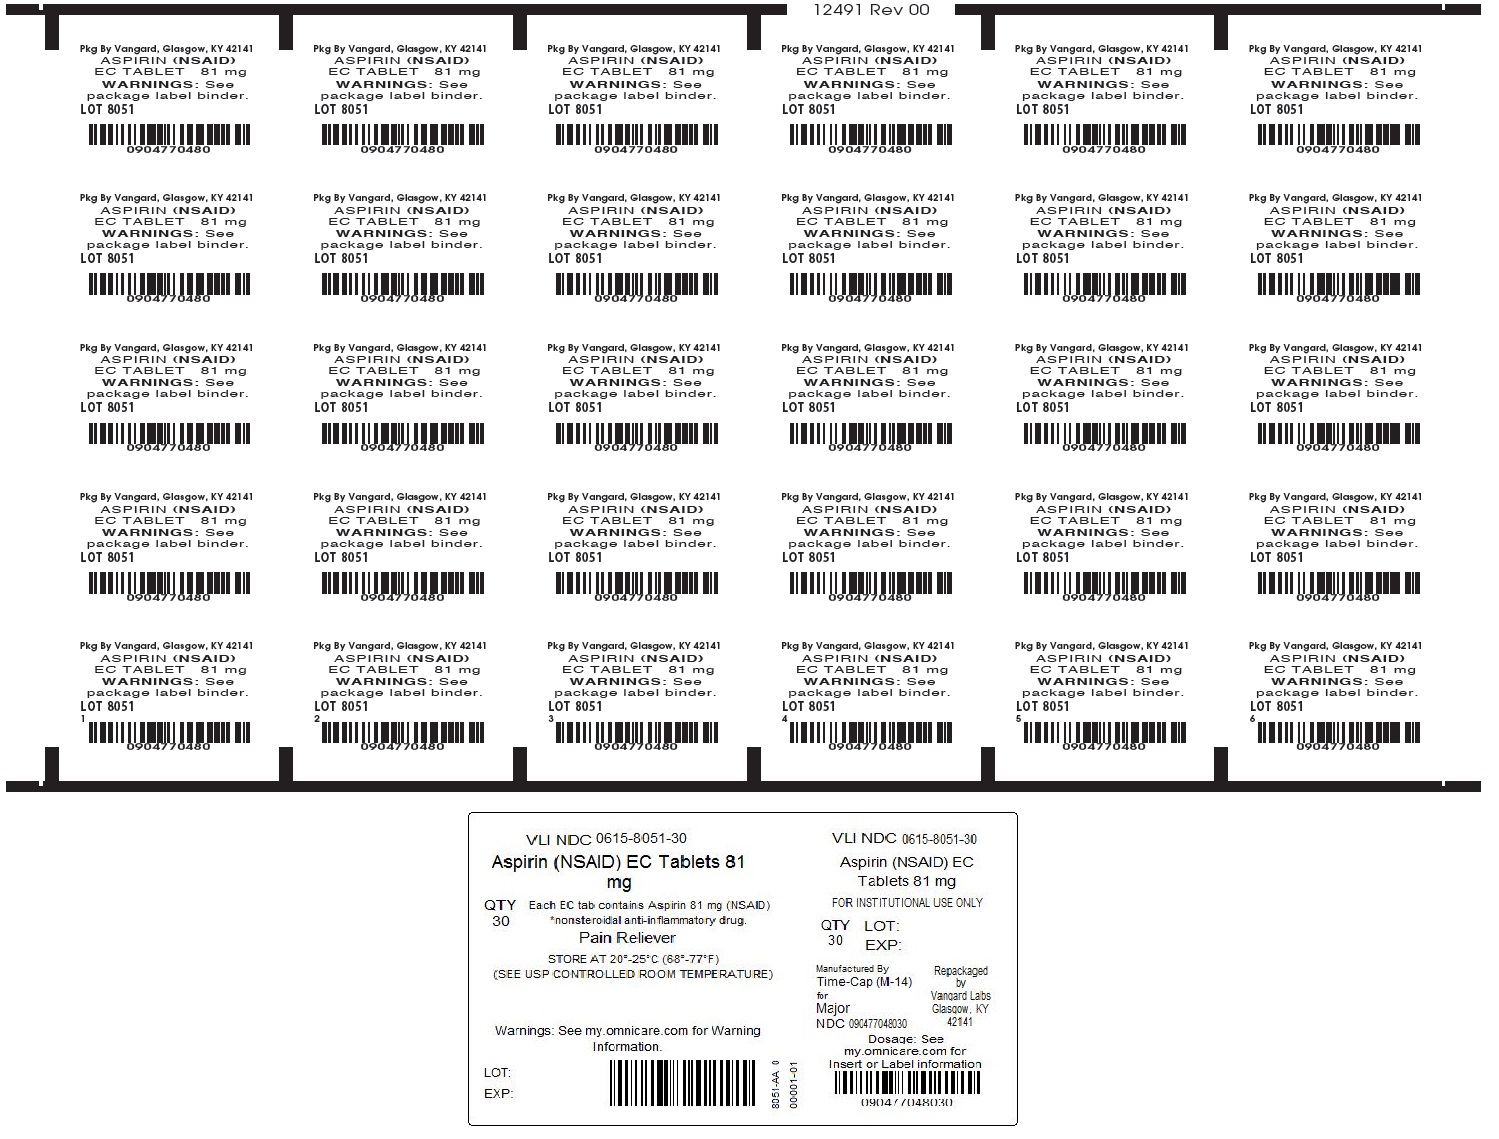 Aspirin EC Tablets, 81mg Unit dose label